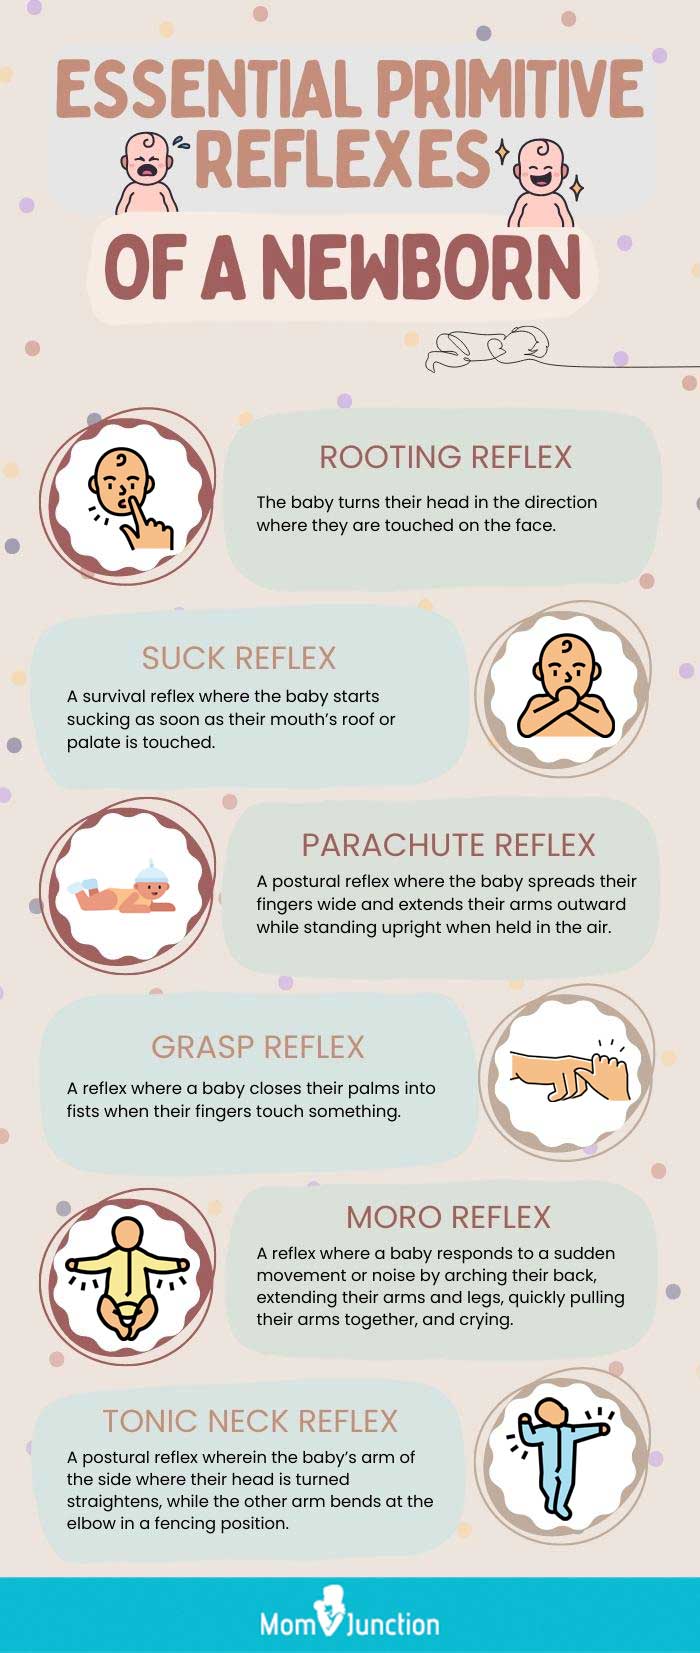 essential primitive reflexes of a newborn (infographic)